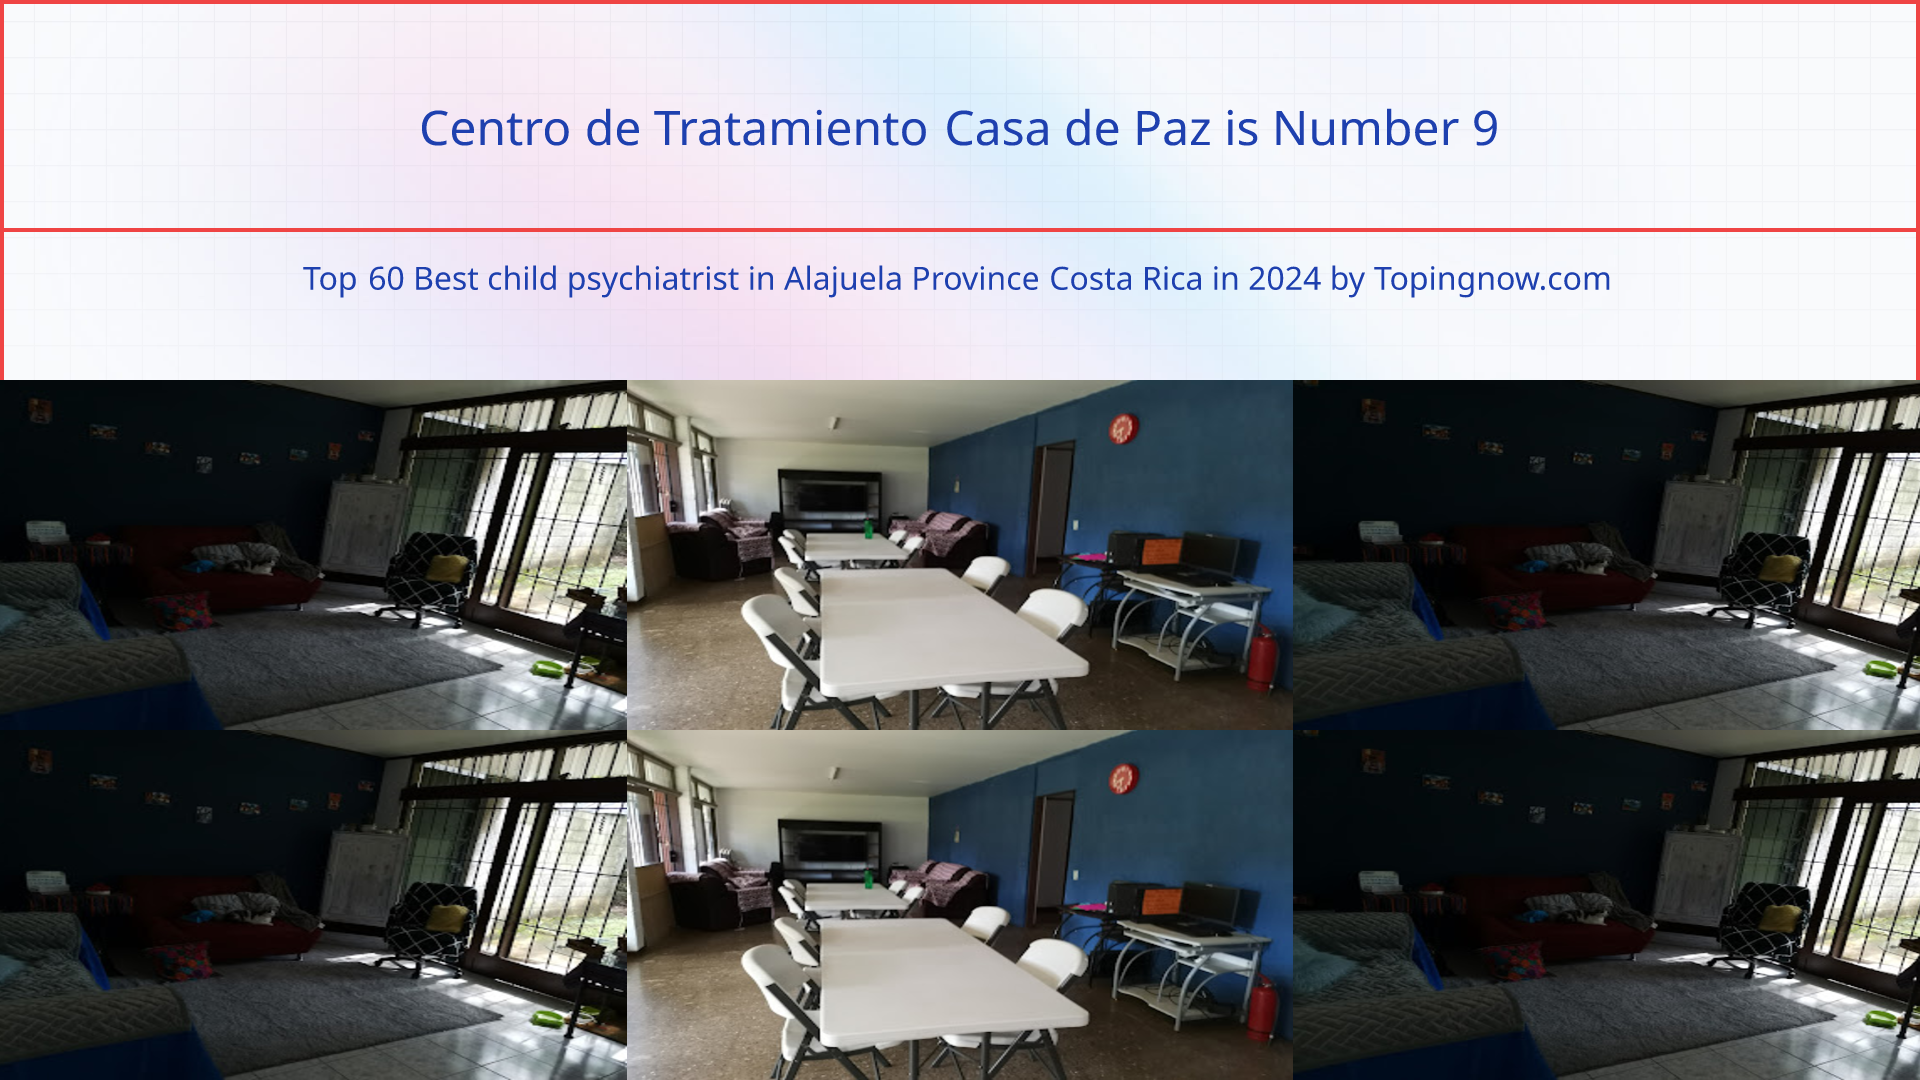 Centro de Tratamiento Casa de Paz: Top 60 Best child psychiatrist in Alajuela Province Costa Rica in 2024